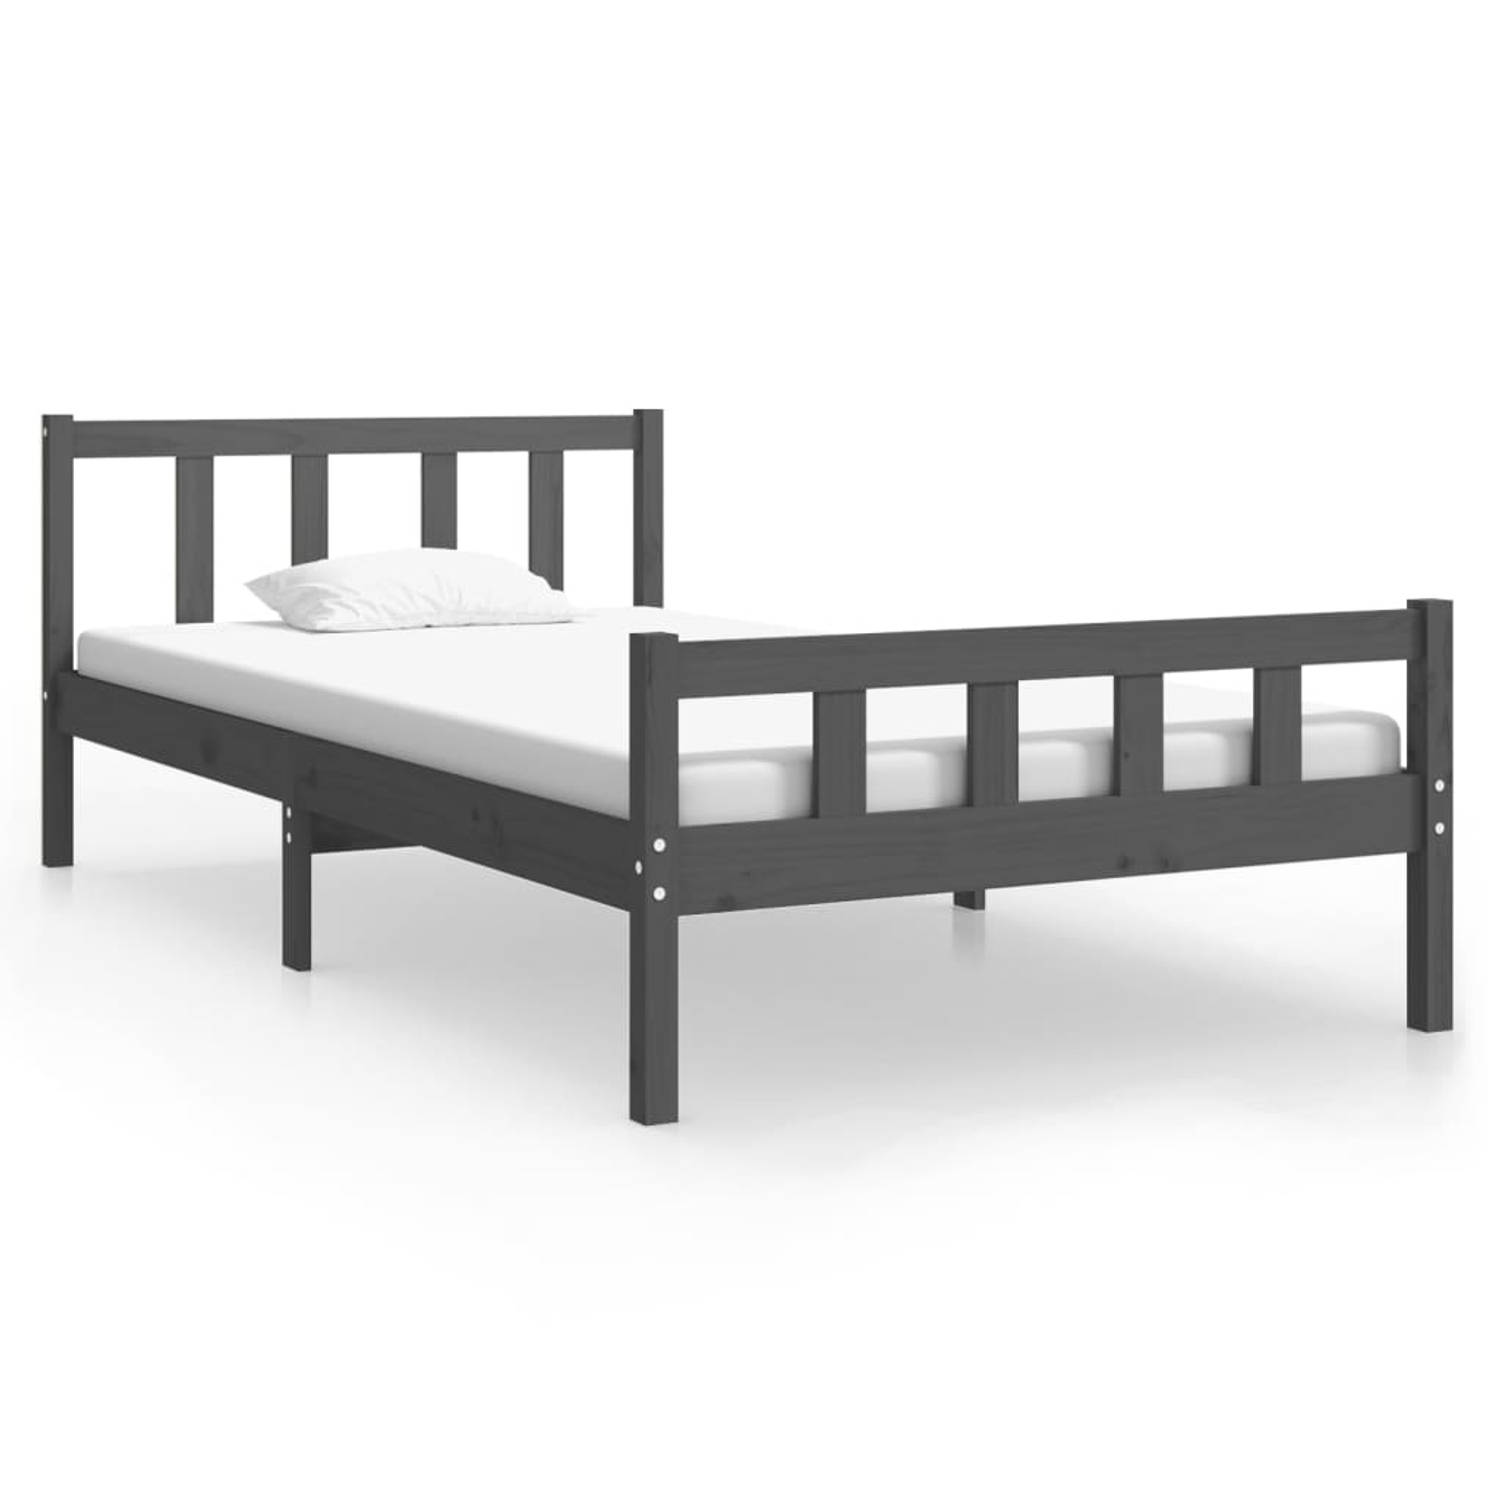 The Living Store Bedframe massief hout grijs 100x200 cm - Bedframe - Bedframes - Eenpersoonsbed - Bed - Bedombouw - Ledikant - Houten Bedframe - Eenpersoonsbedden - Bedden - Bedomb